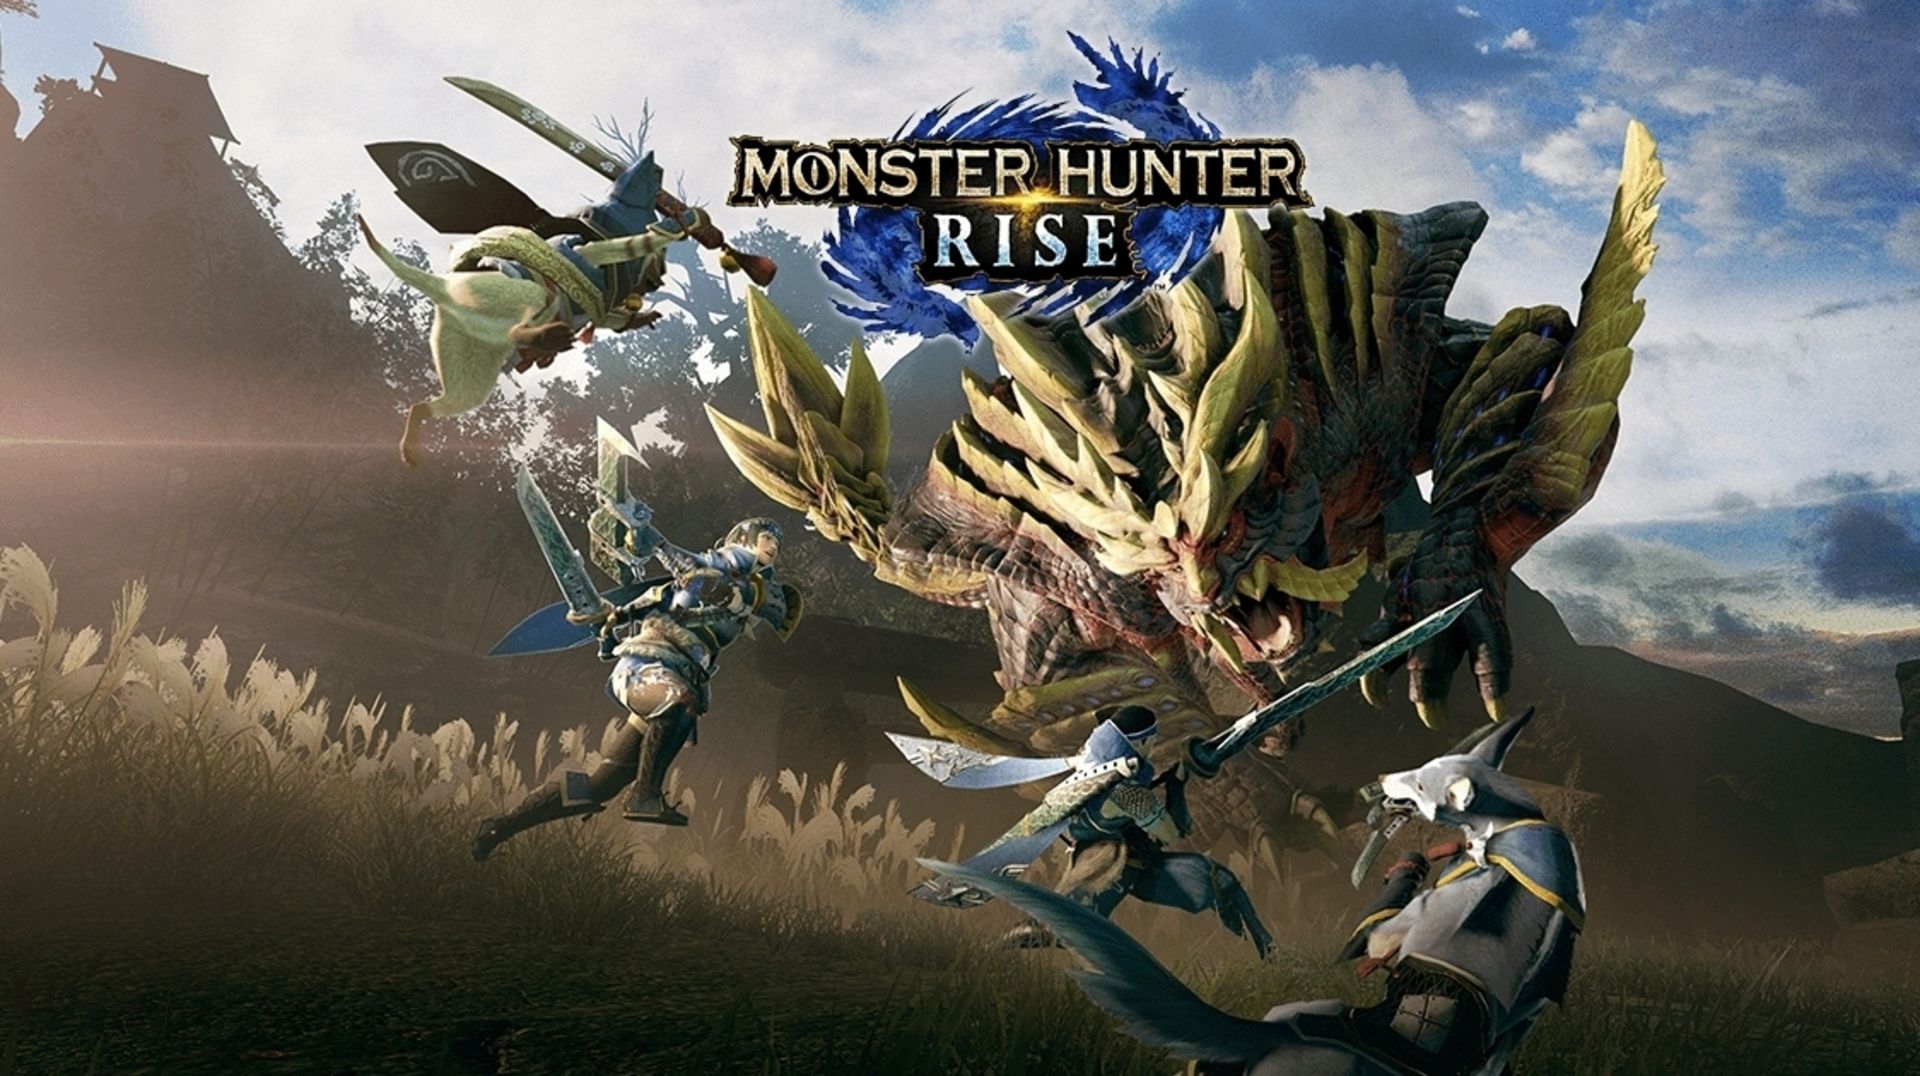 Monster Hinter Rise erhält kostenlosen DLC